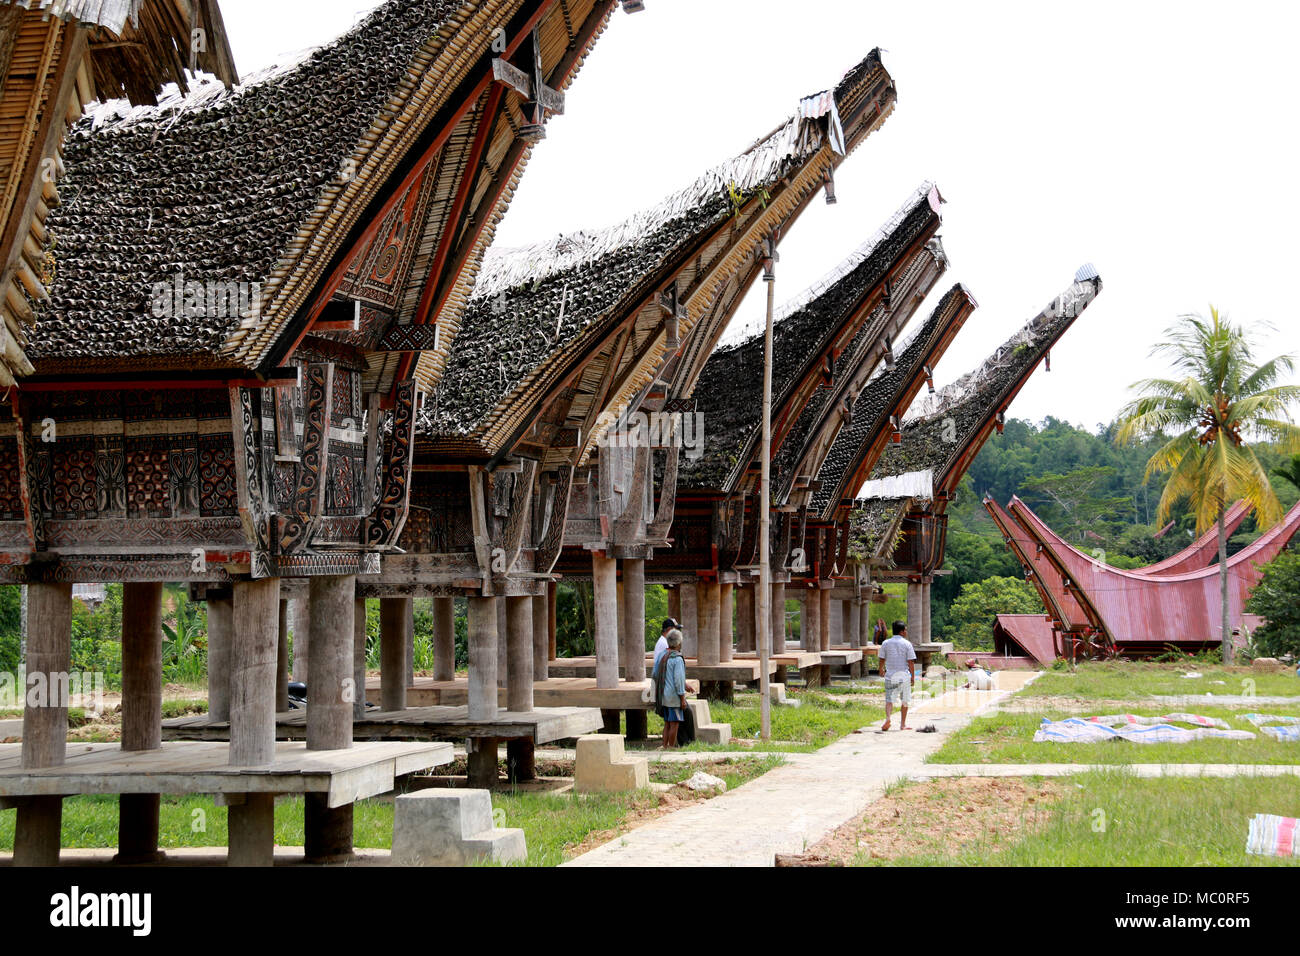 Tongkonans, traditional Toraja houses with massive peaked-roofs, in a Village near Ke’te’ Ke’su, Toraja, Sulawesi, Indonesia Stock Photo